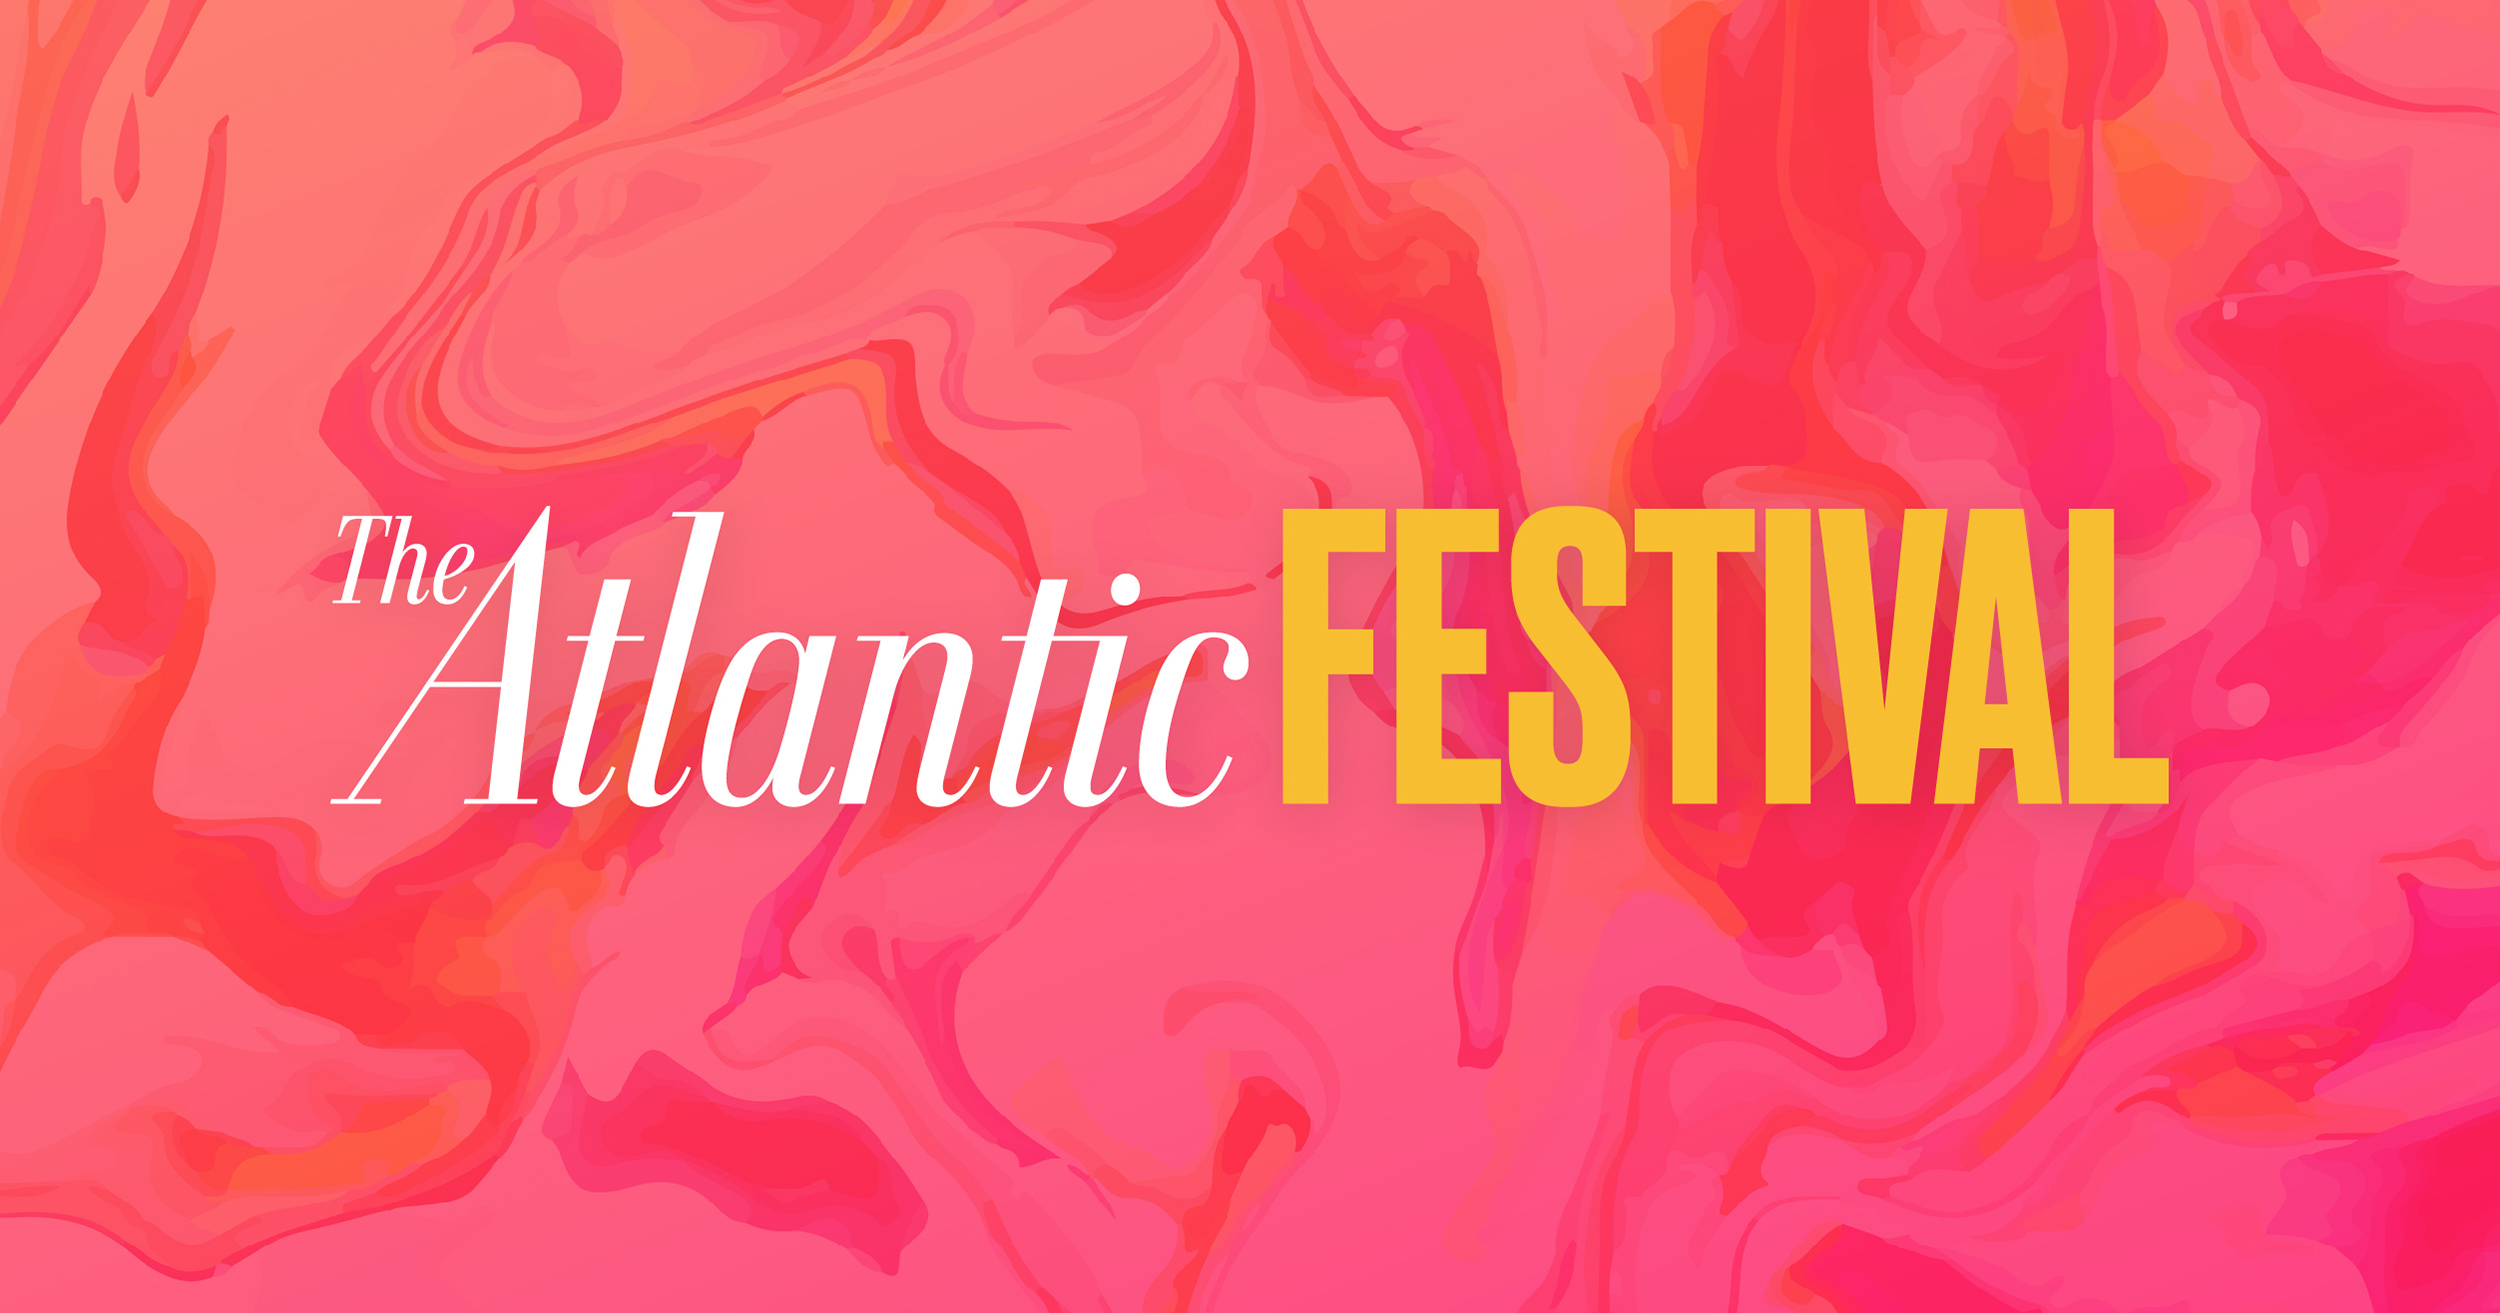 The Atlantic Festival 2018 The Atlantic